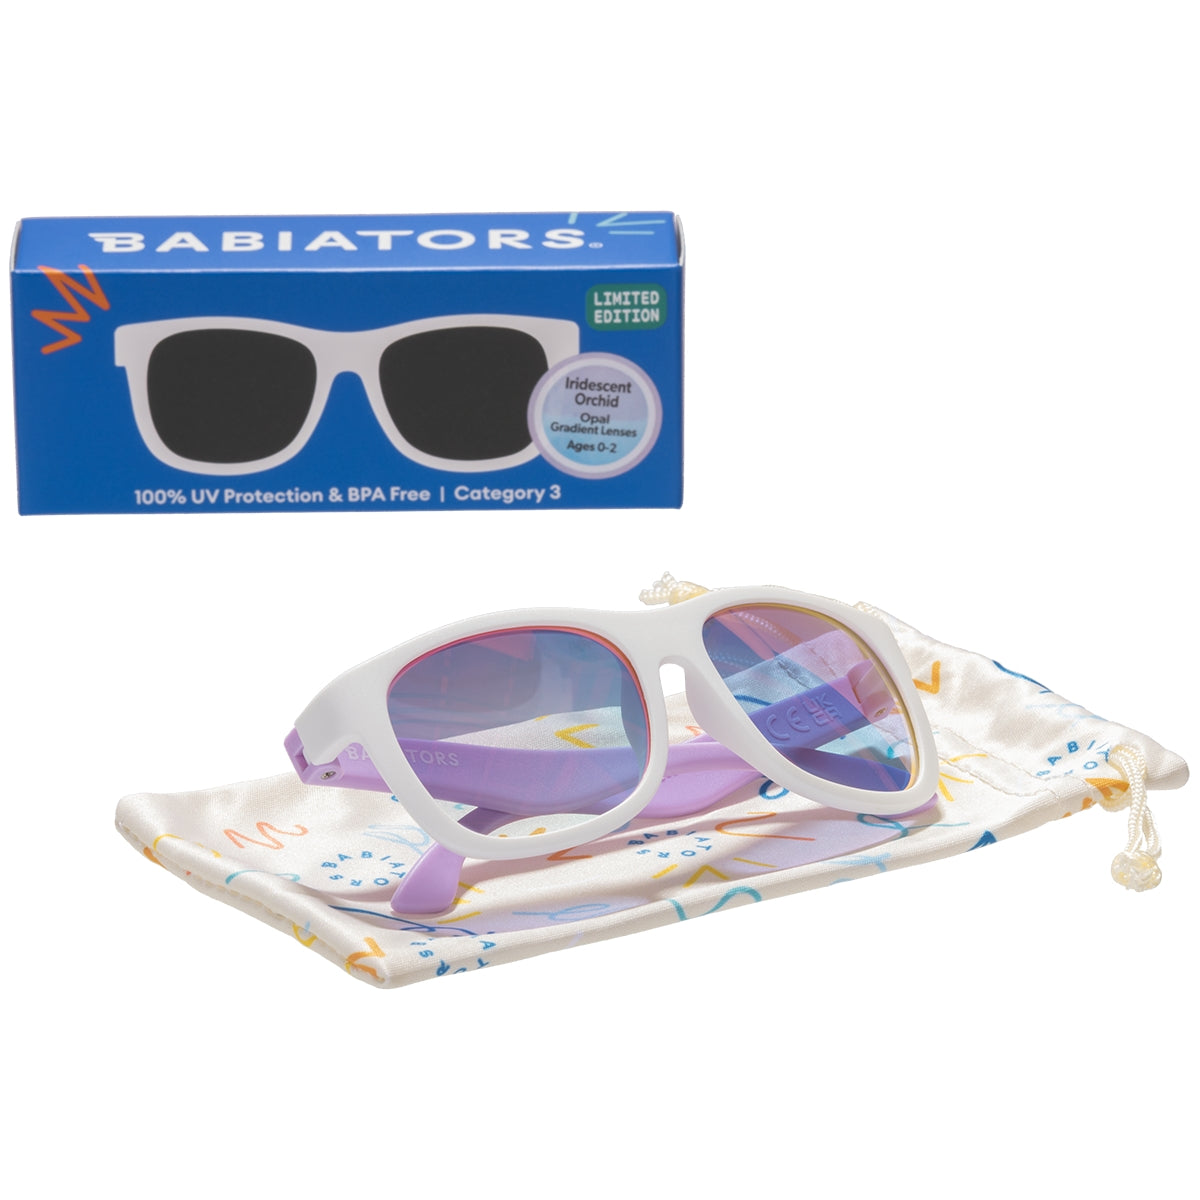 Navigator Sunglasses | Iridescent Orchid Two Tone Opal Gradient Lenses